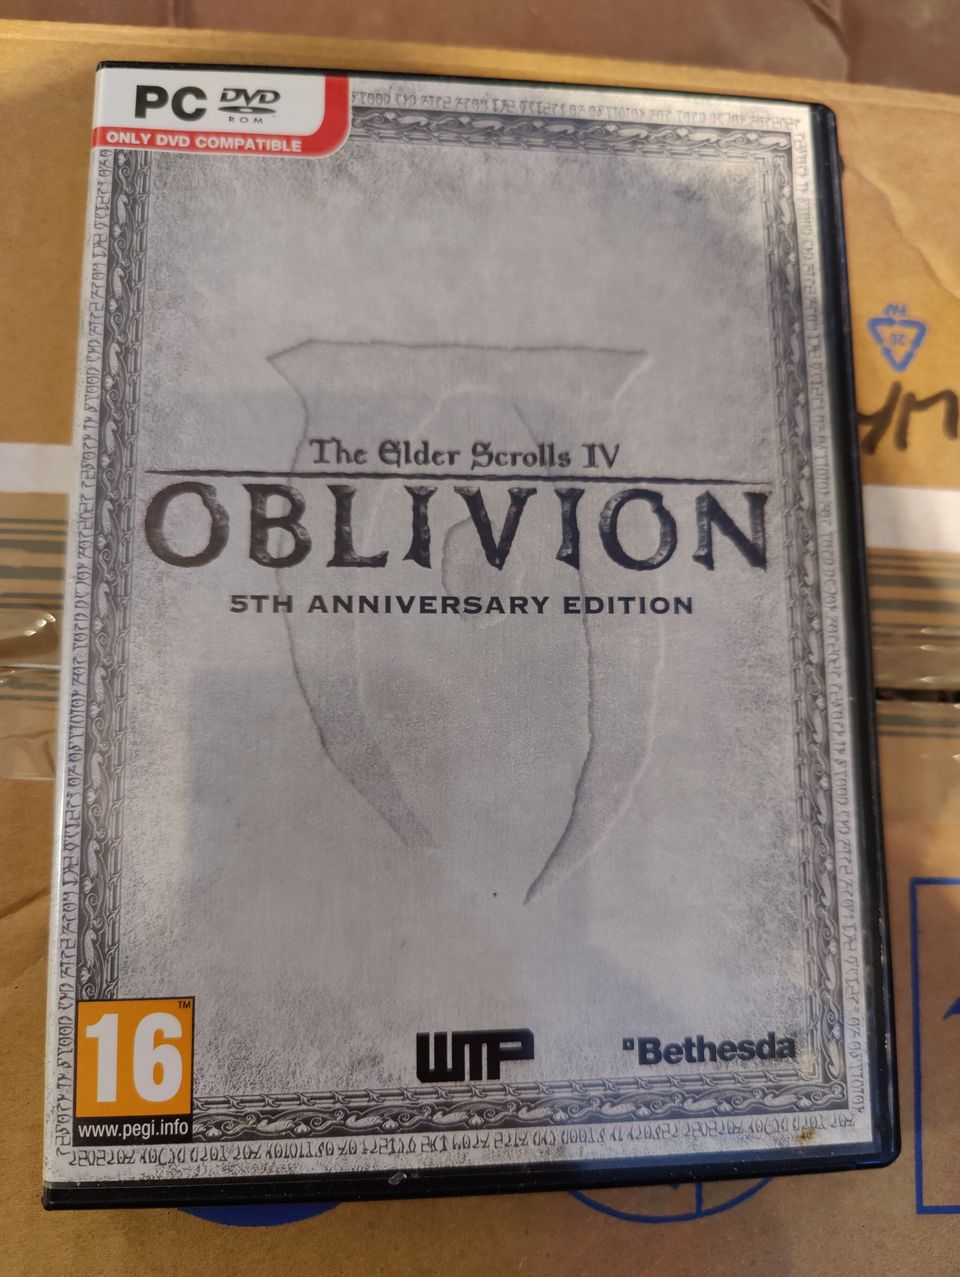 The elder scrolls IV Oblivion 25th anniversary